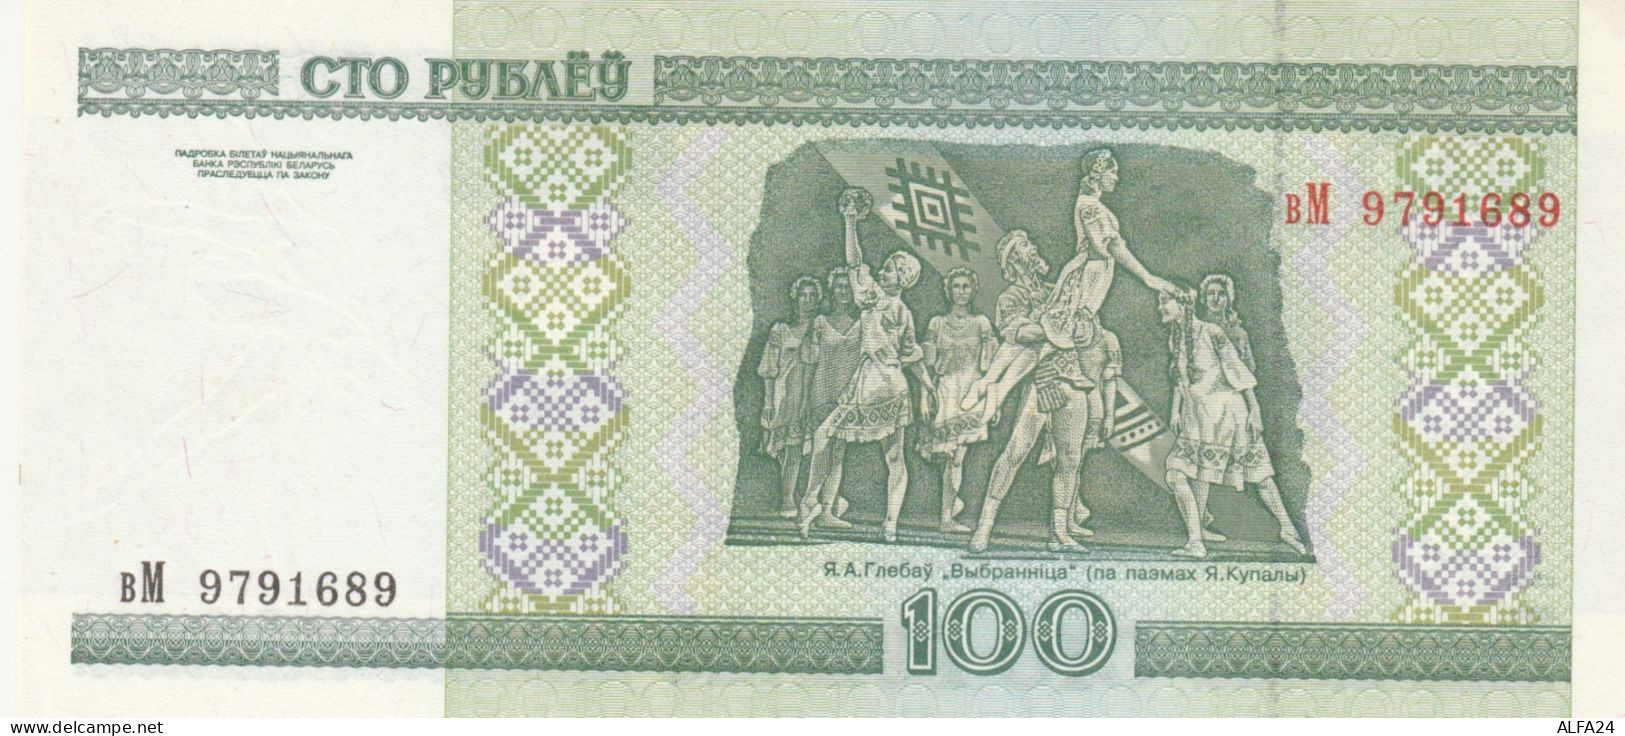 BANCONOTA BIELORUSSIA 100 UNC (RY2676 - Bielorussia